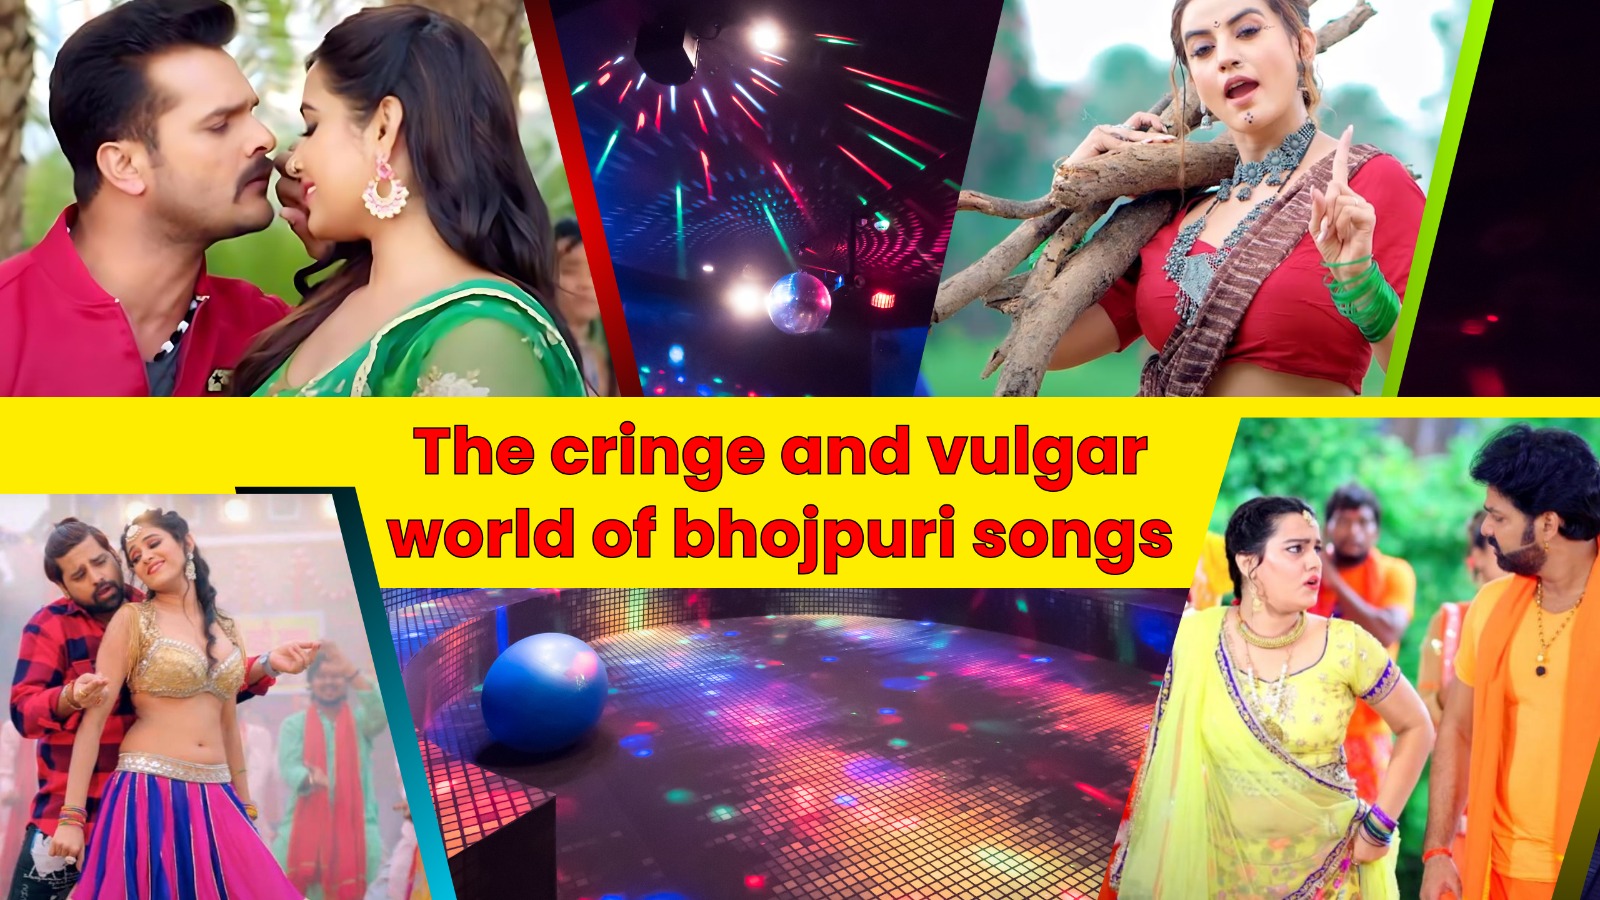 The cringe and vulgar world of bhojpuri songs